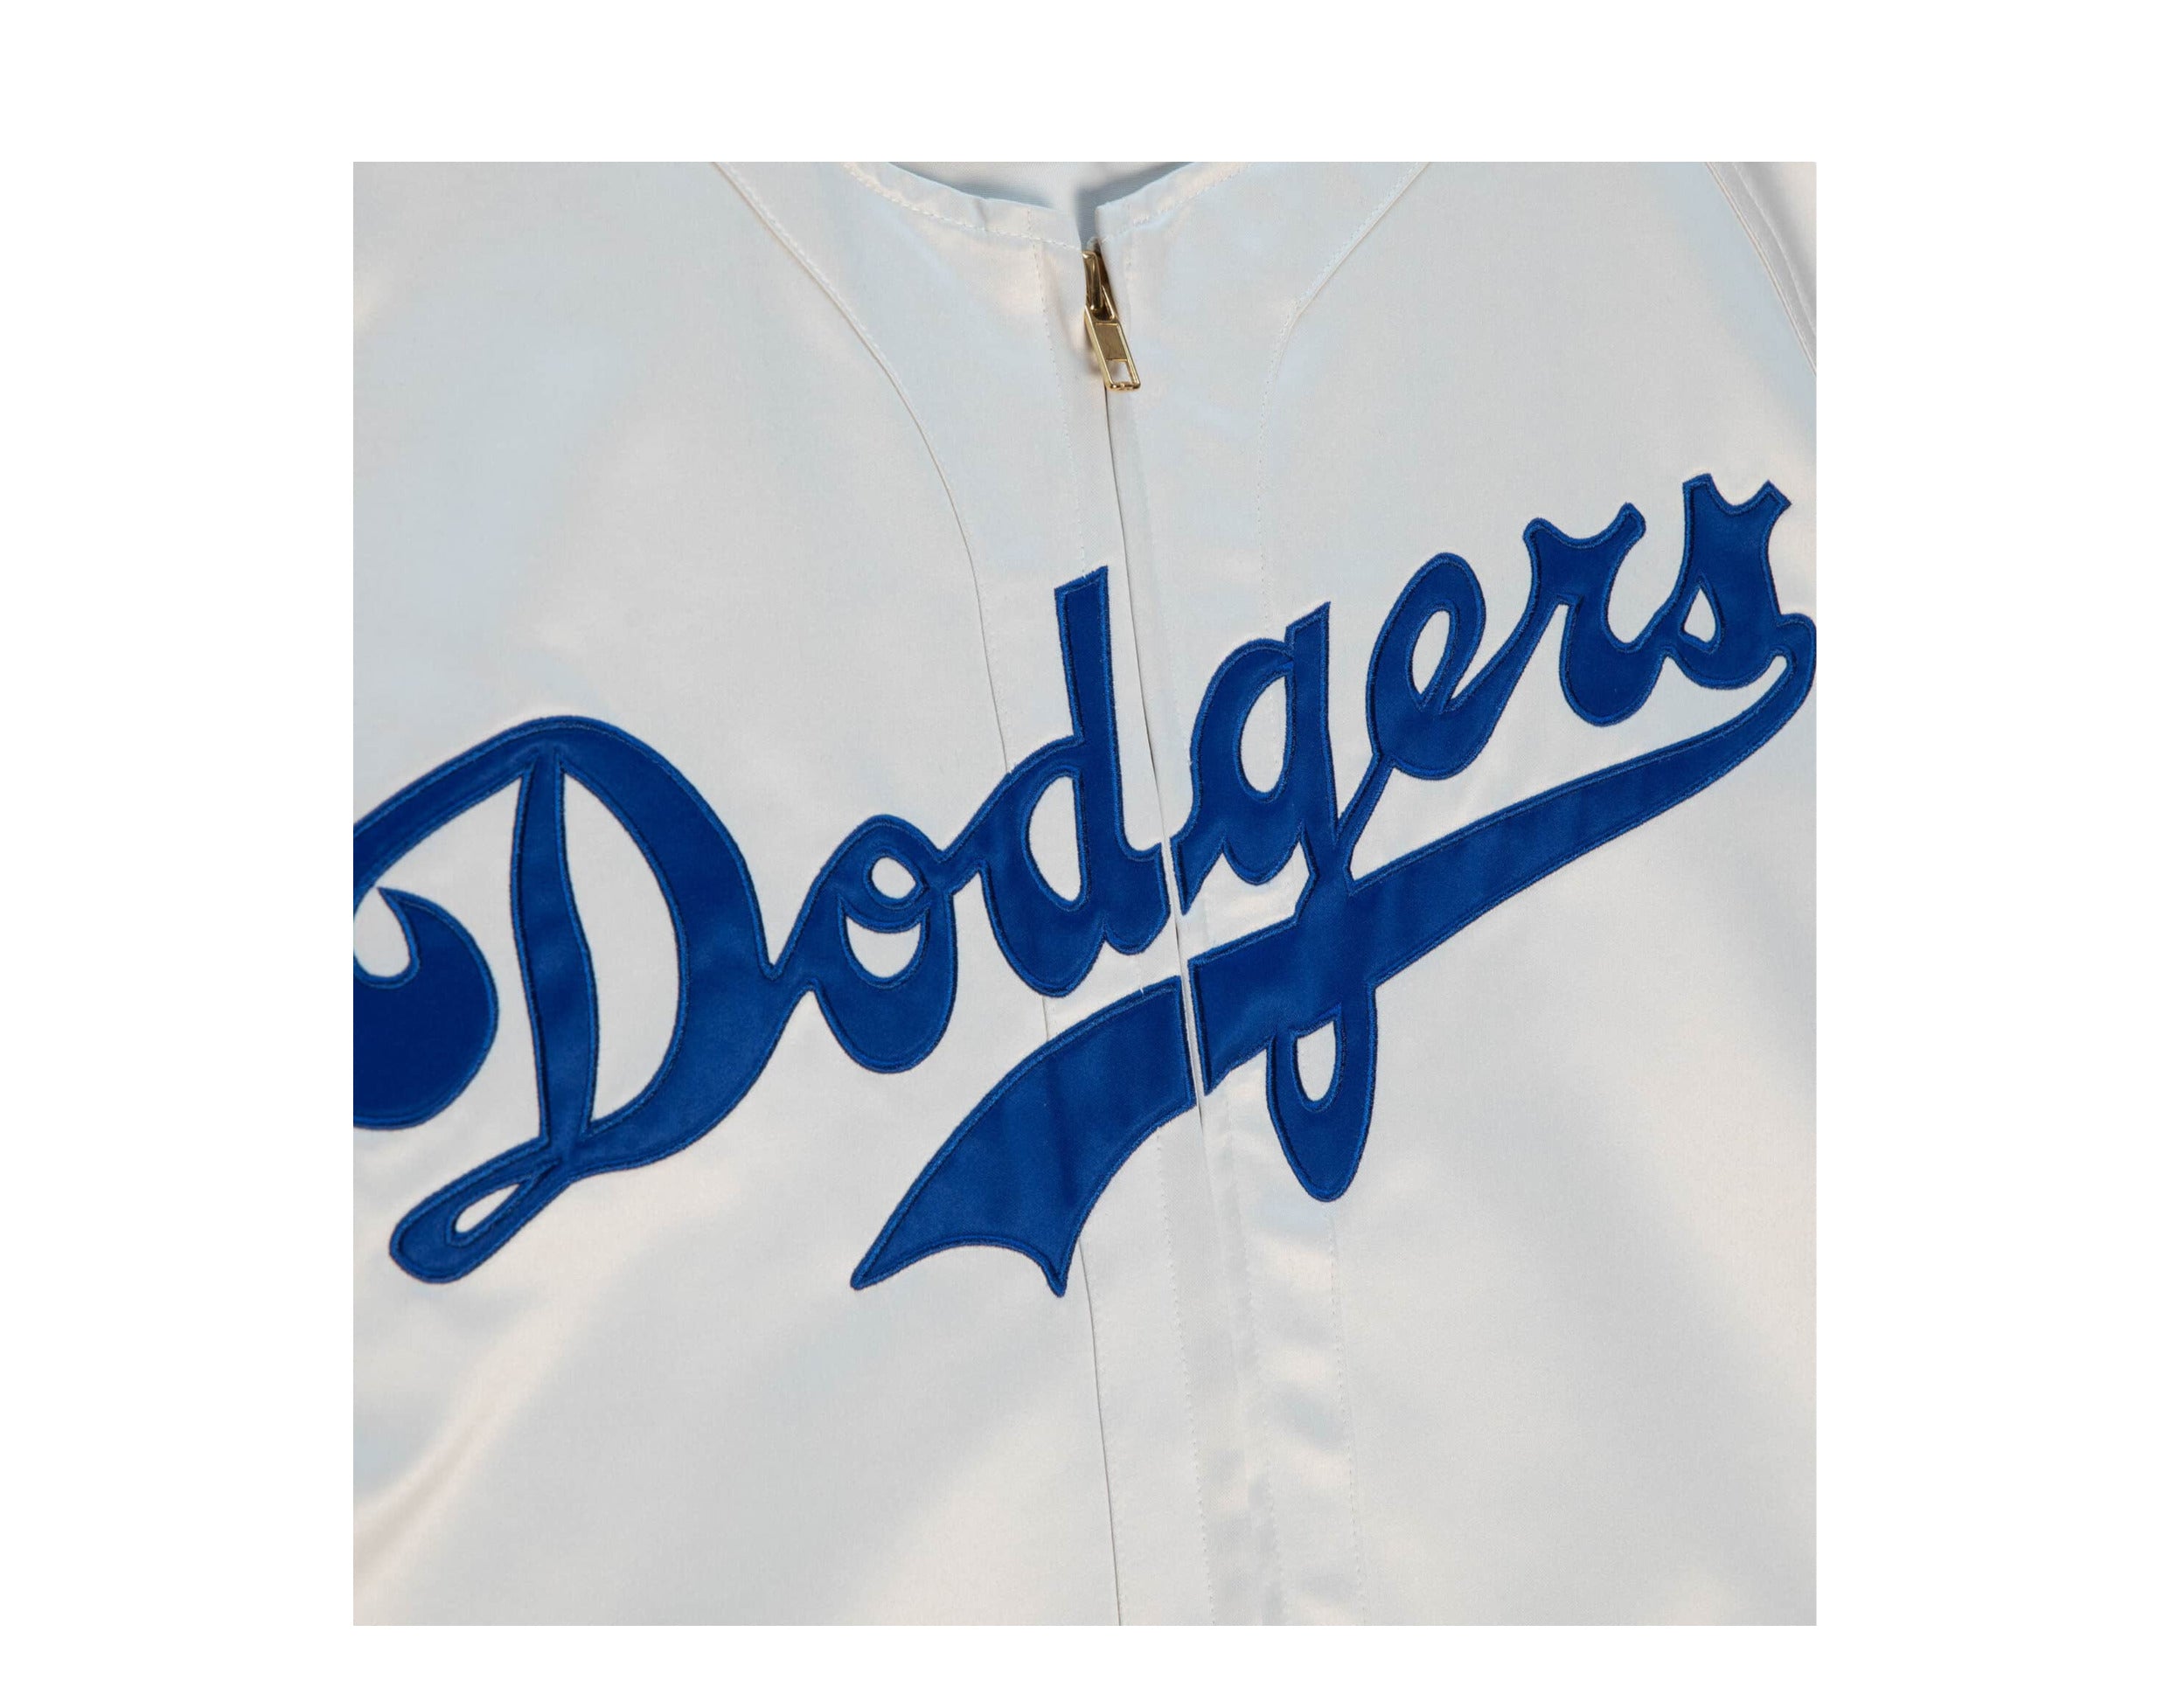 Dodgers Apparel, Dodgers Gear, Brooklyn Dodgers Merch